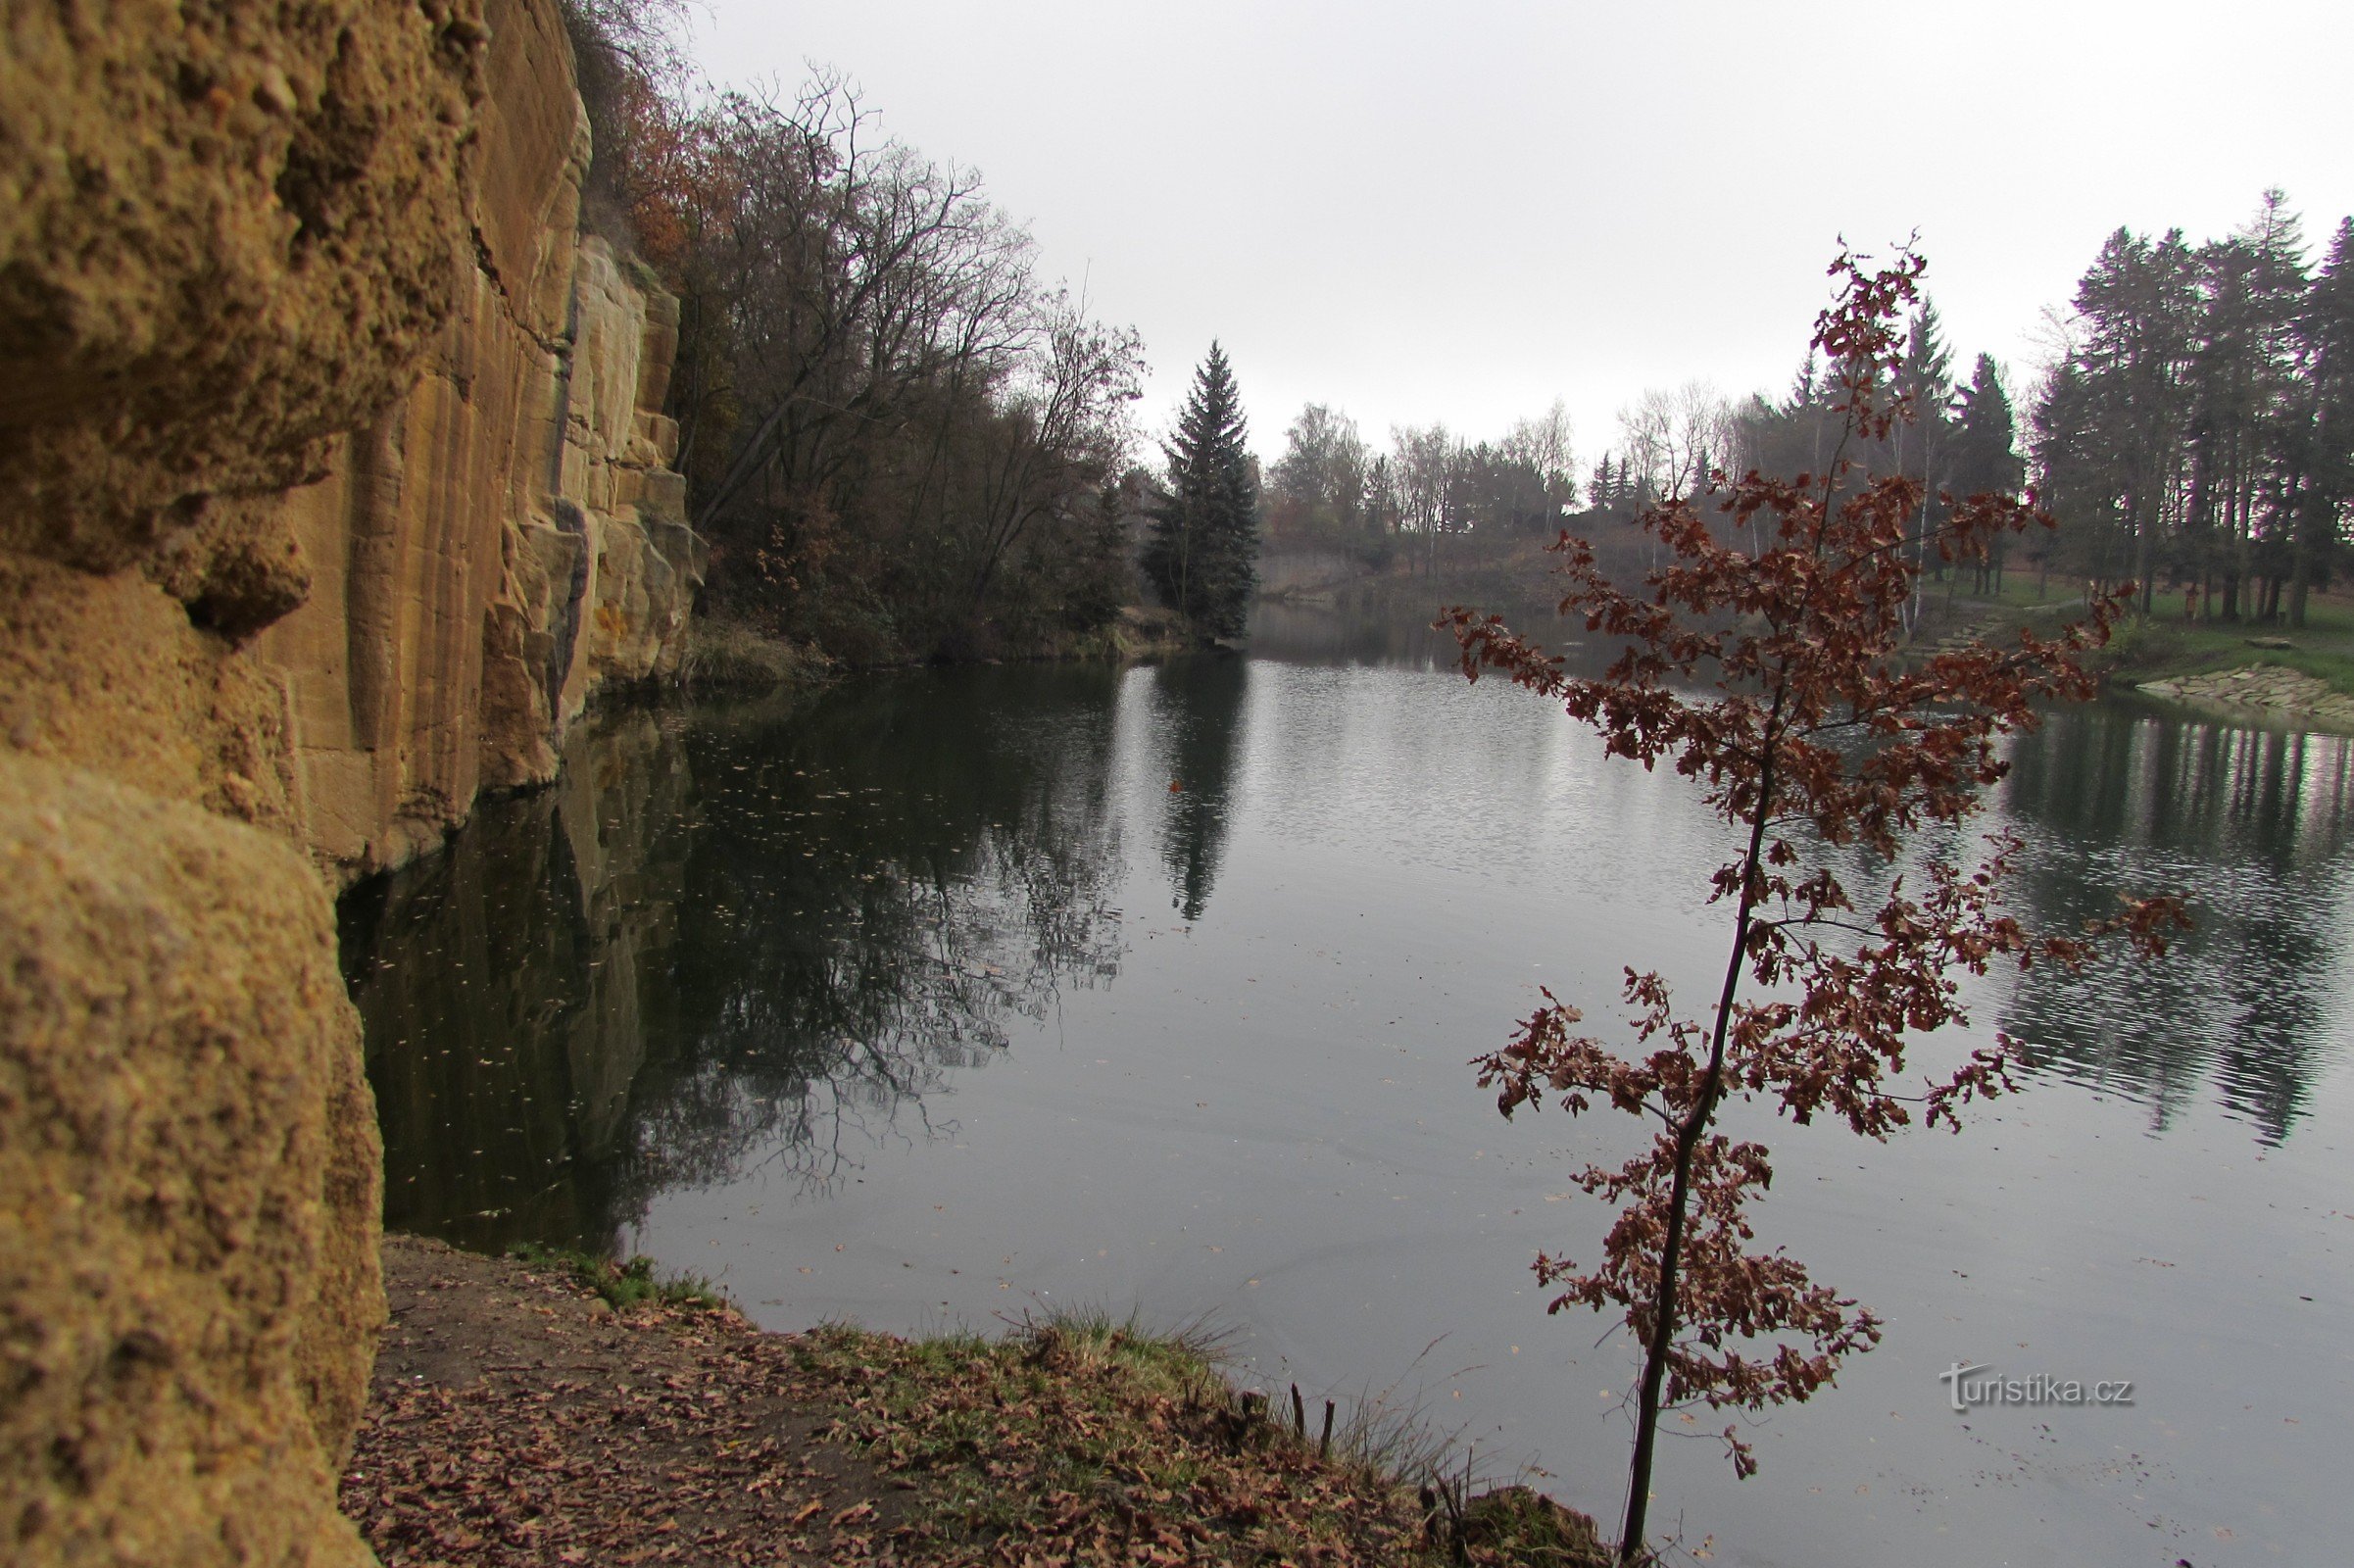 Hồ Košutek